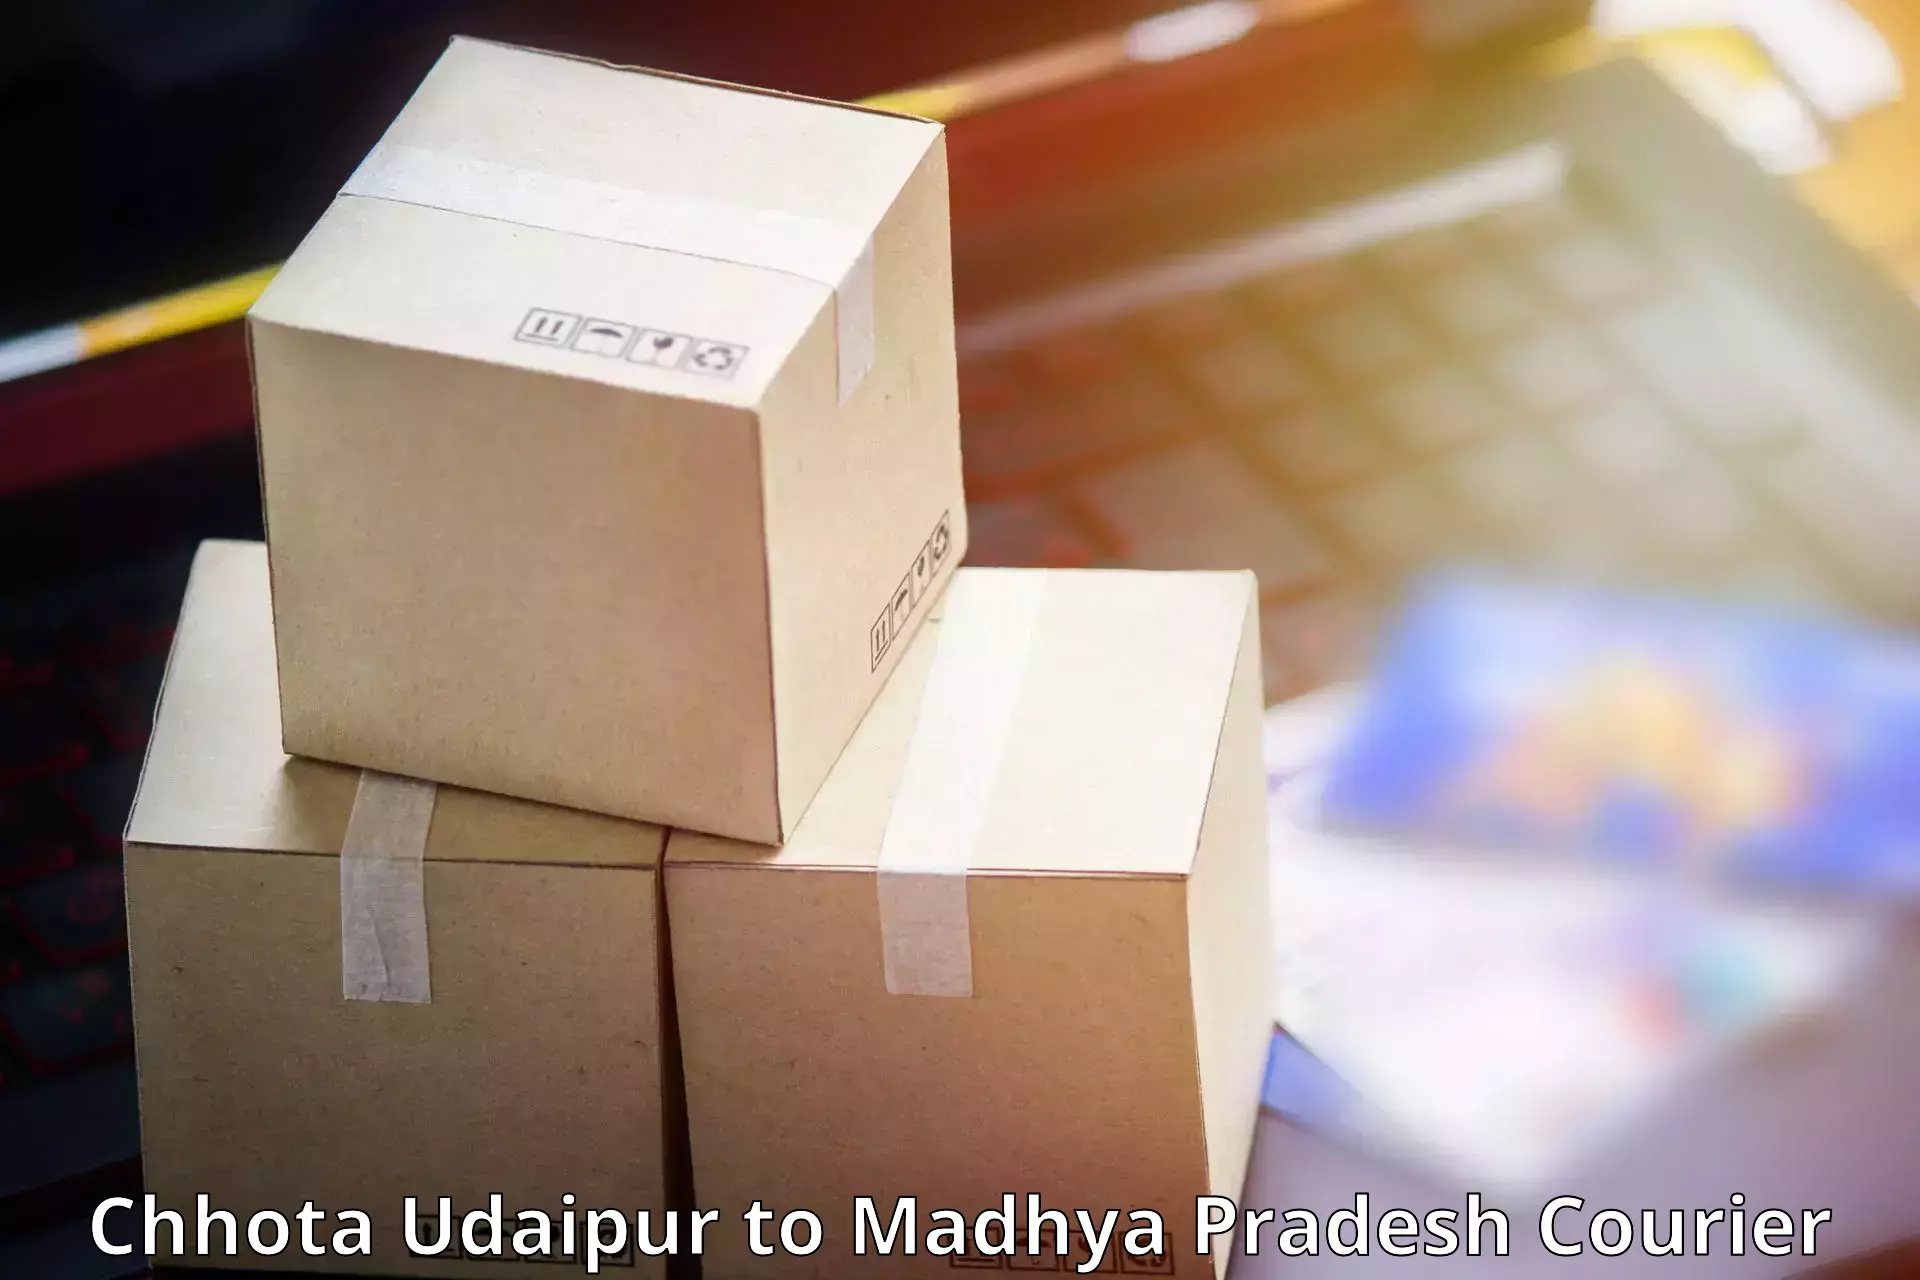 Sustainable courier practices Chhota Udaipur to Hoshangabad